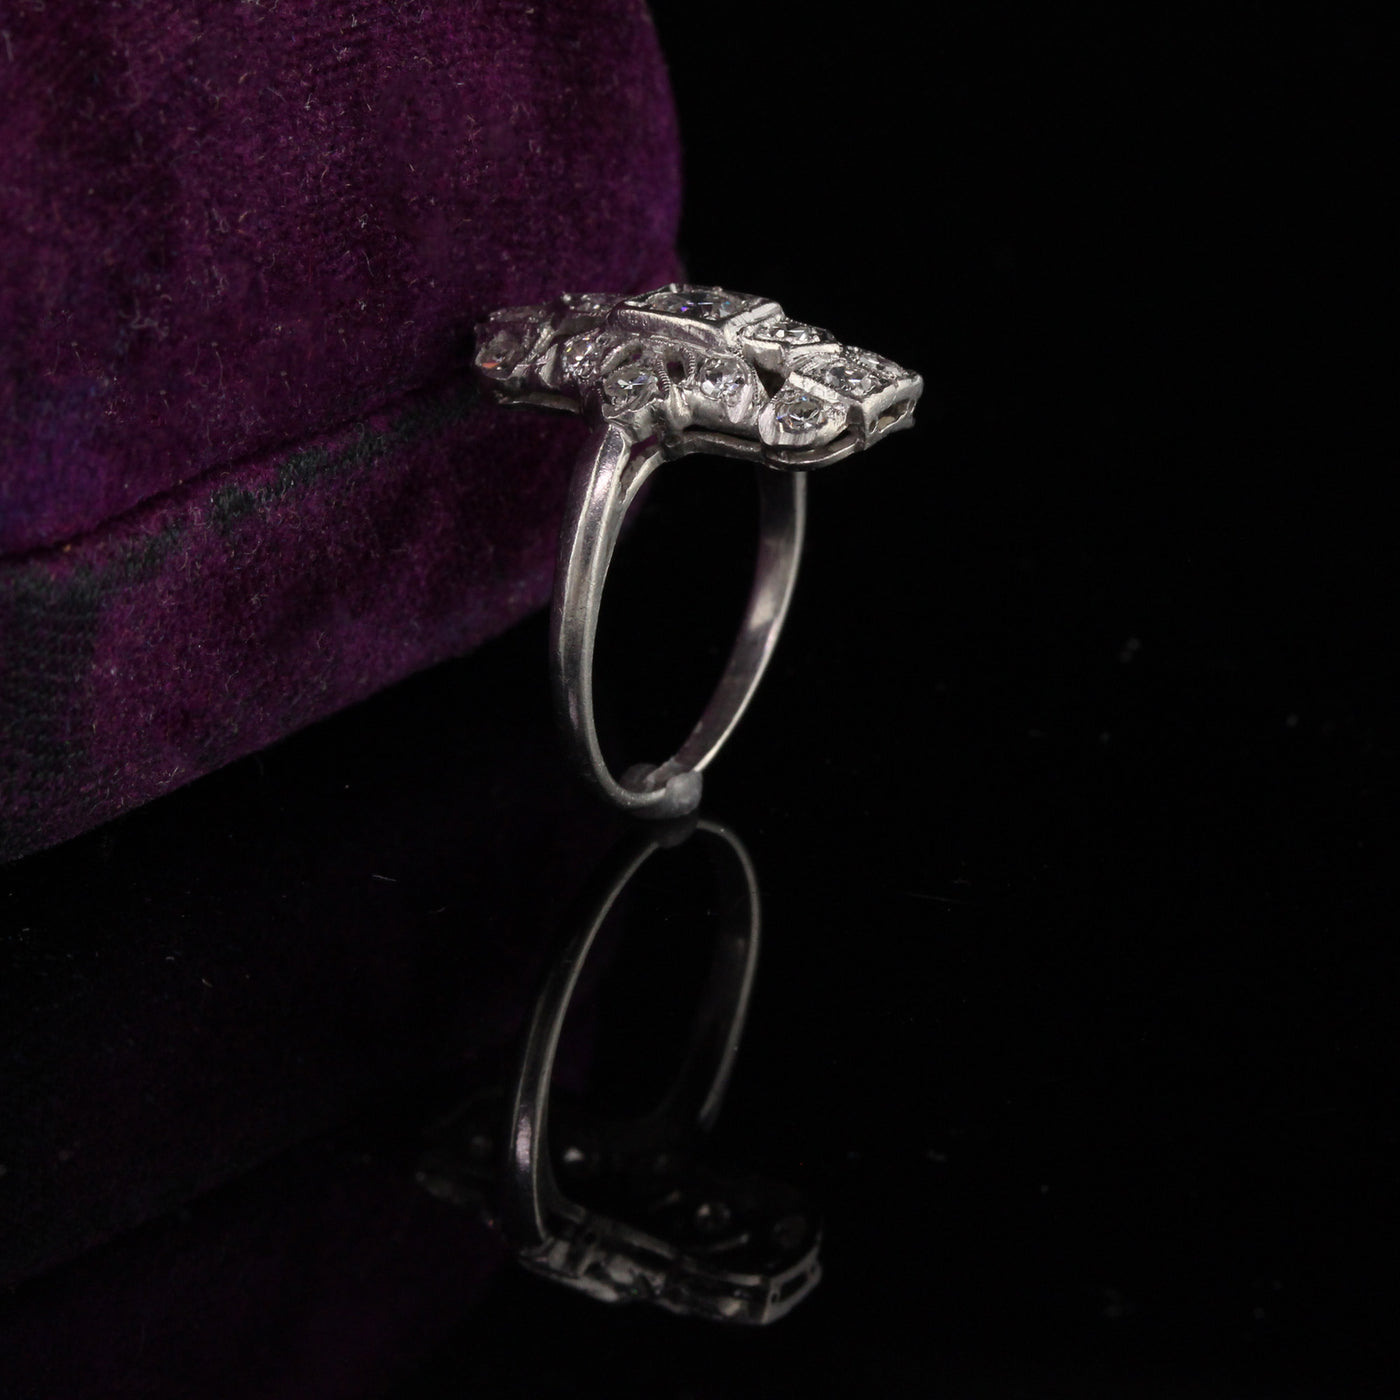 Antique Art Deco Platinum Diamond Shield Ring - Size 4